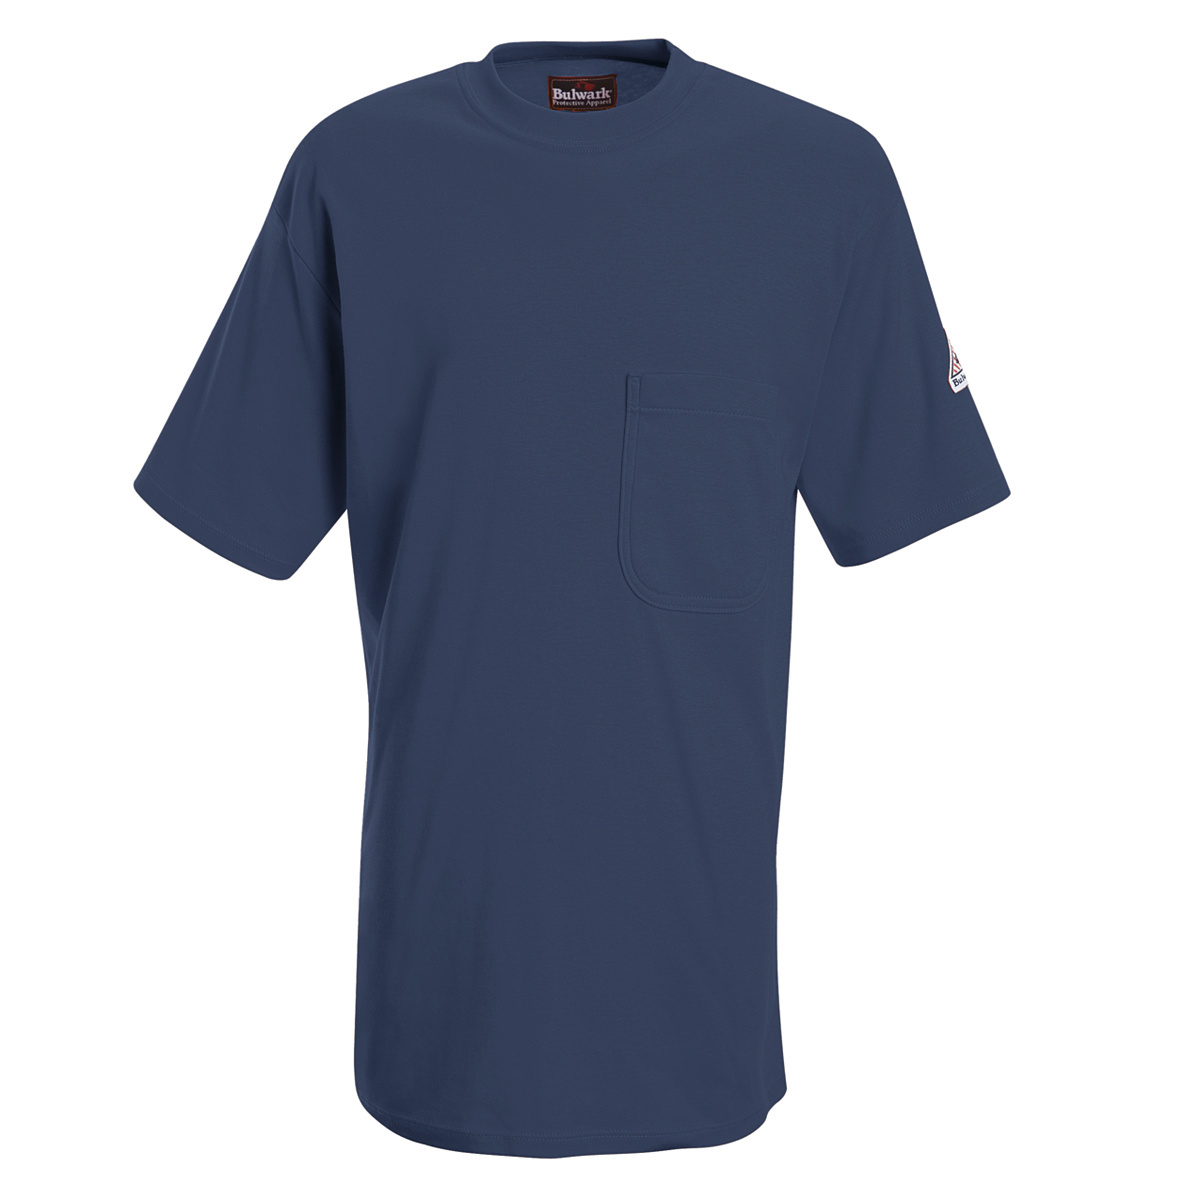 Bulwark® Medium Regular Navy Blue EXCEL FR® Interlock FR Cotton Flame Resistant Shirt